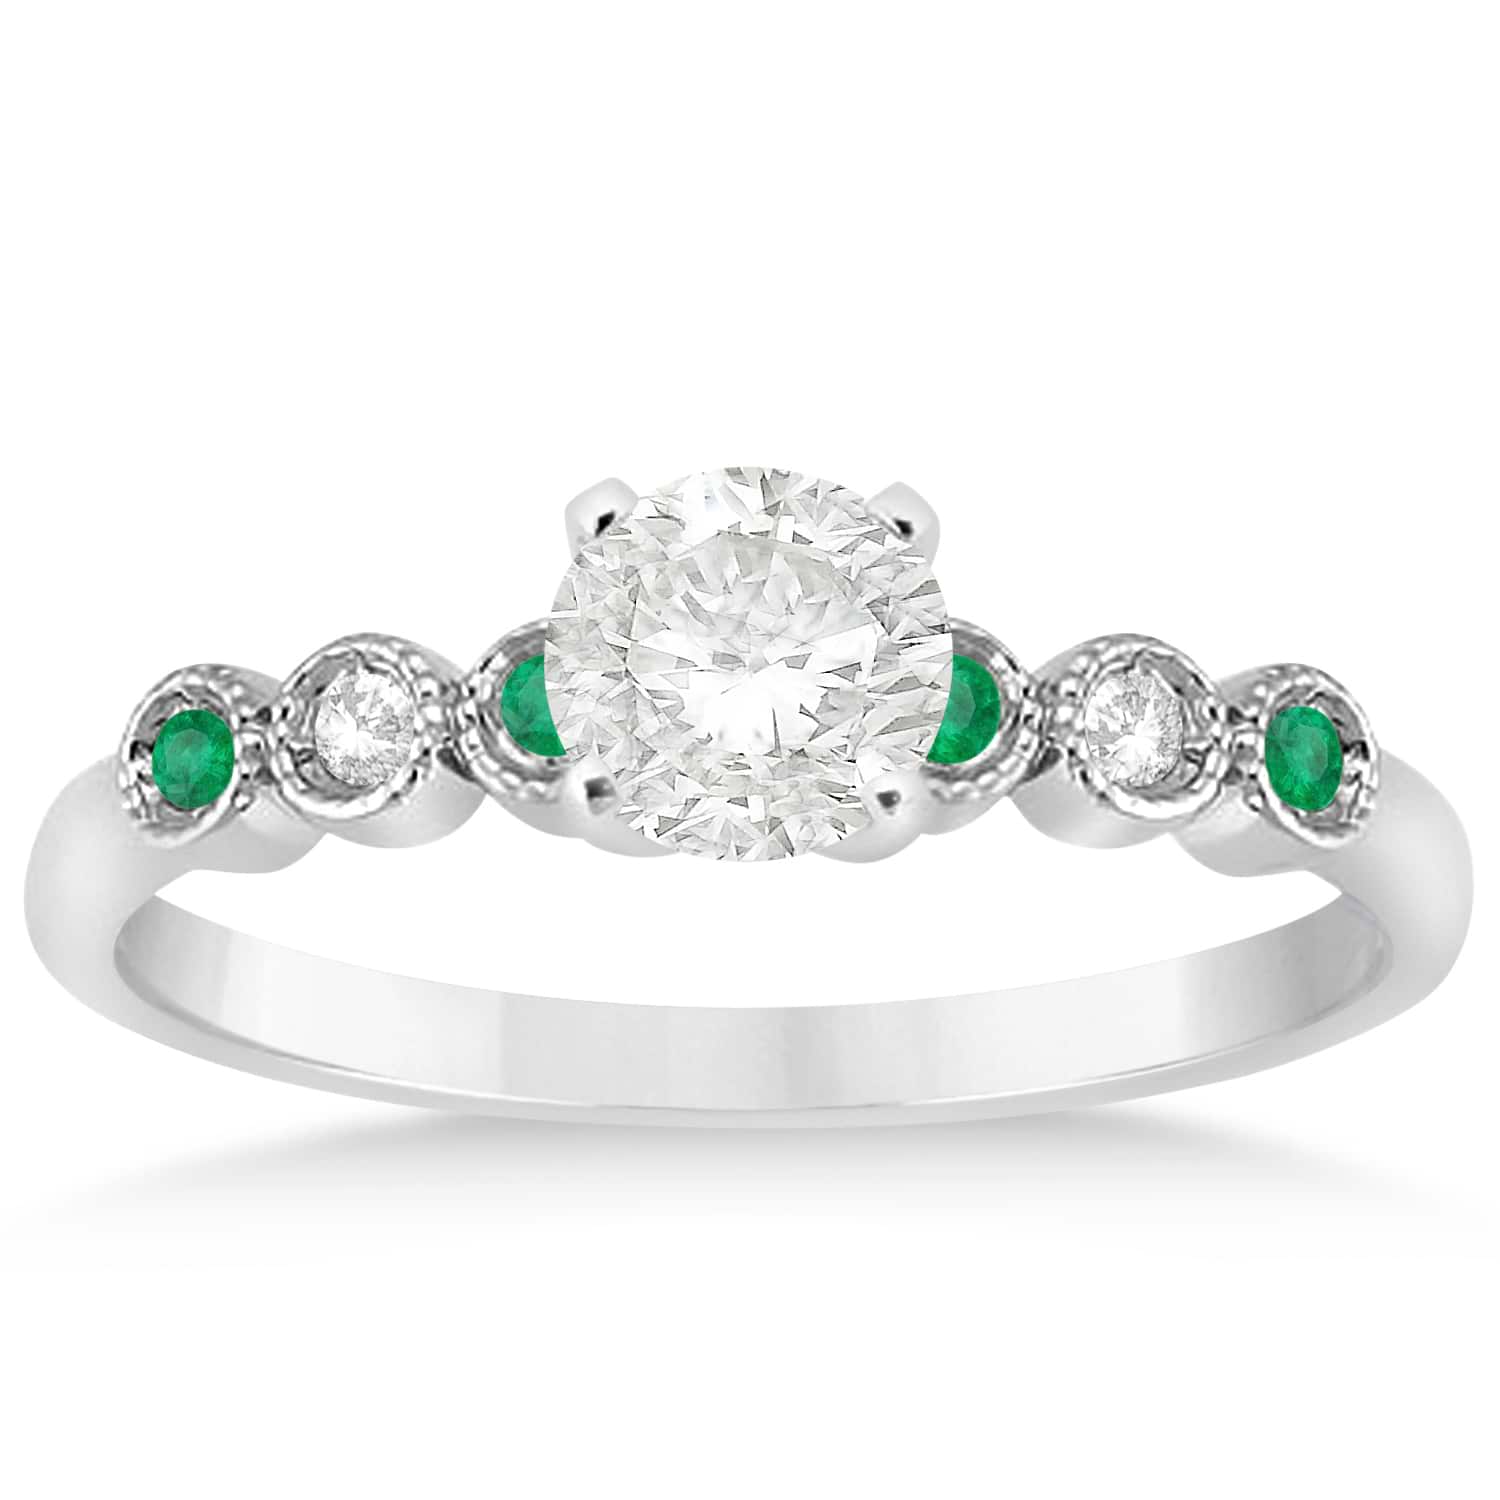 Emerald & Diamond Bezel Engagement Ring 14k White Gold 0.09ct